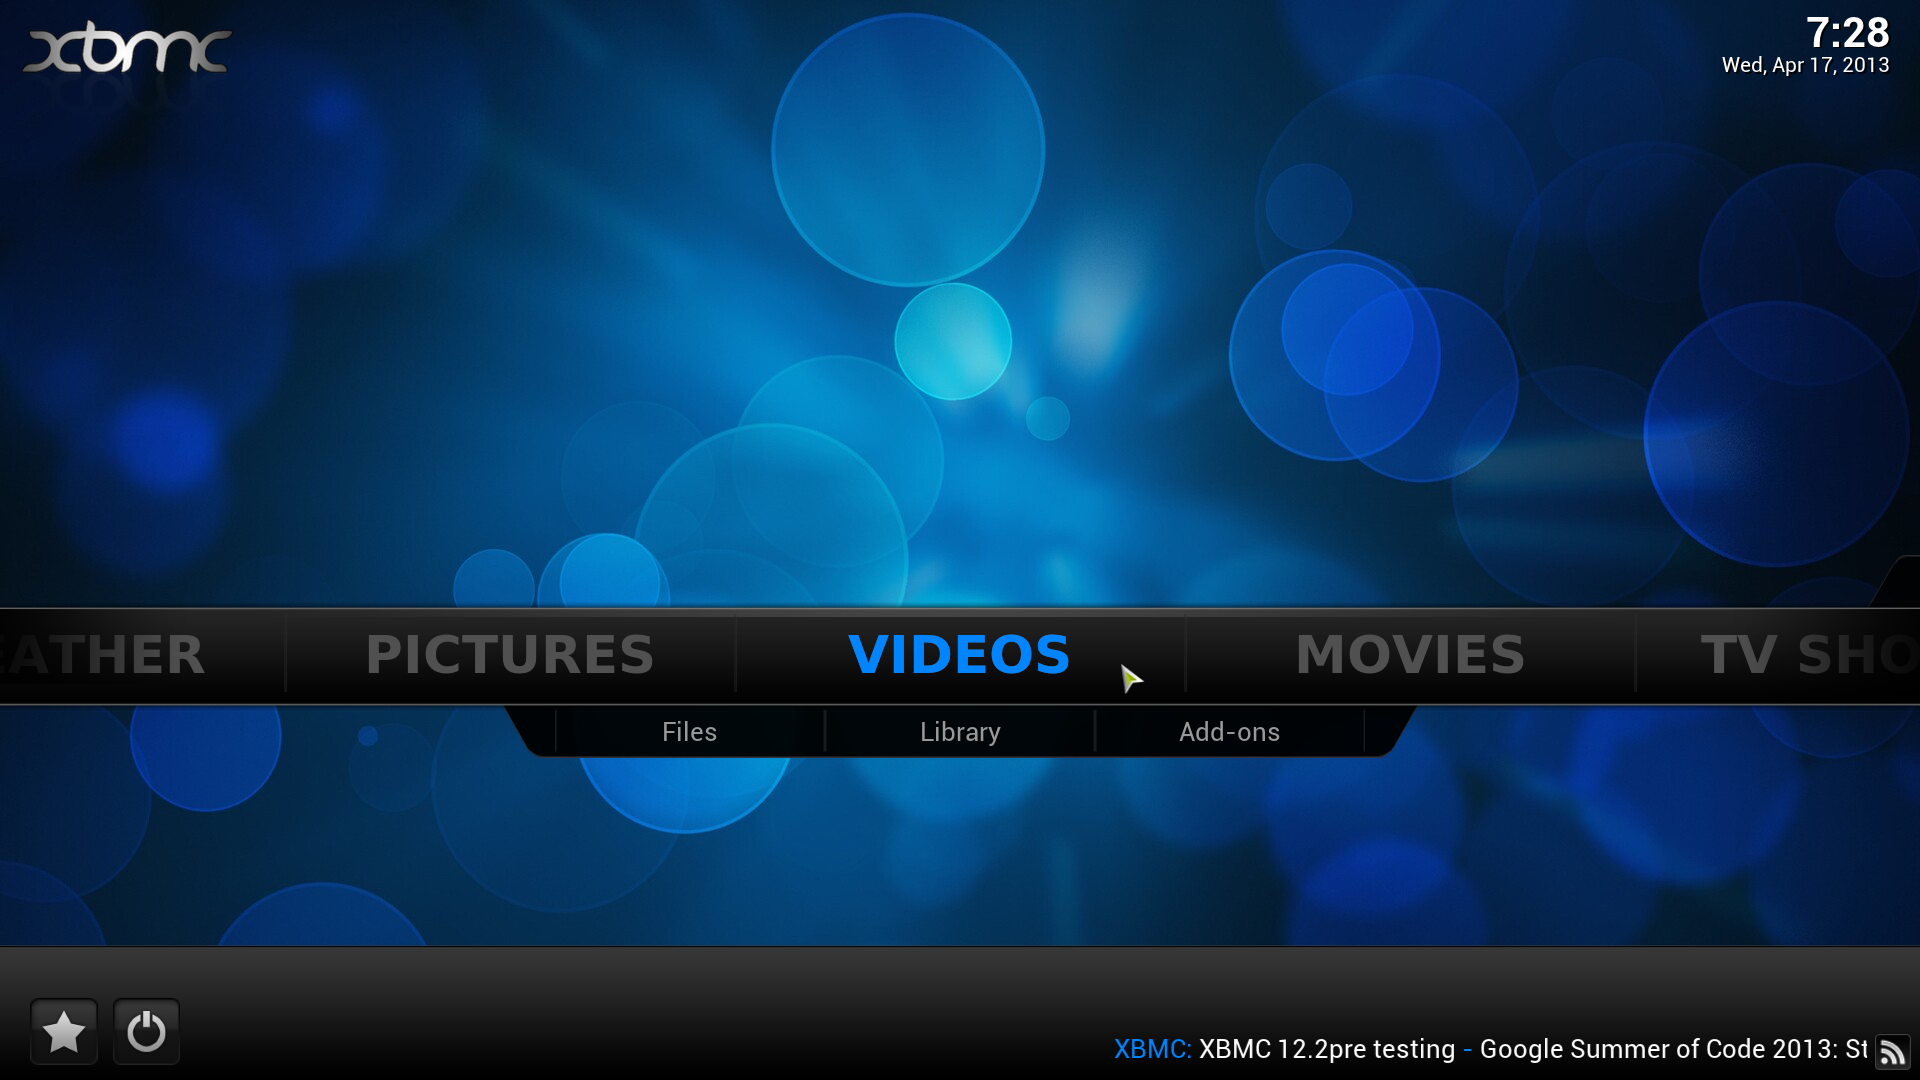 Step 1: Select "Videos" on main menu